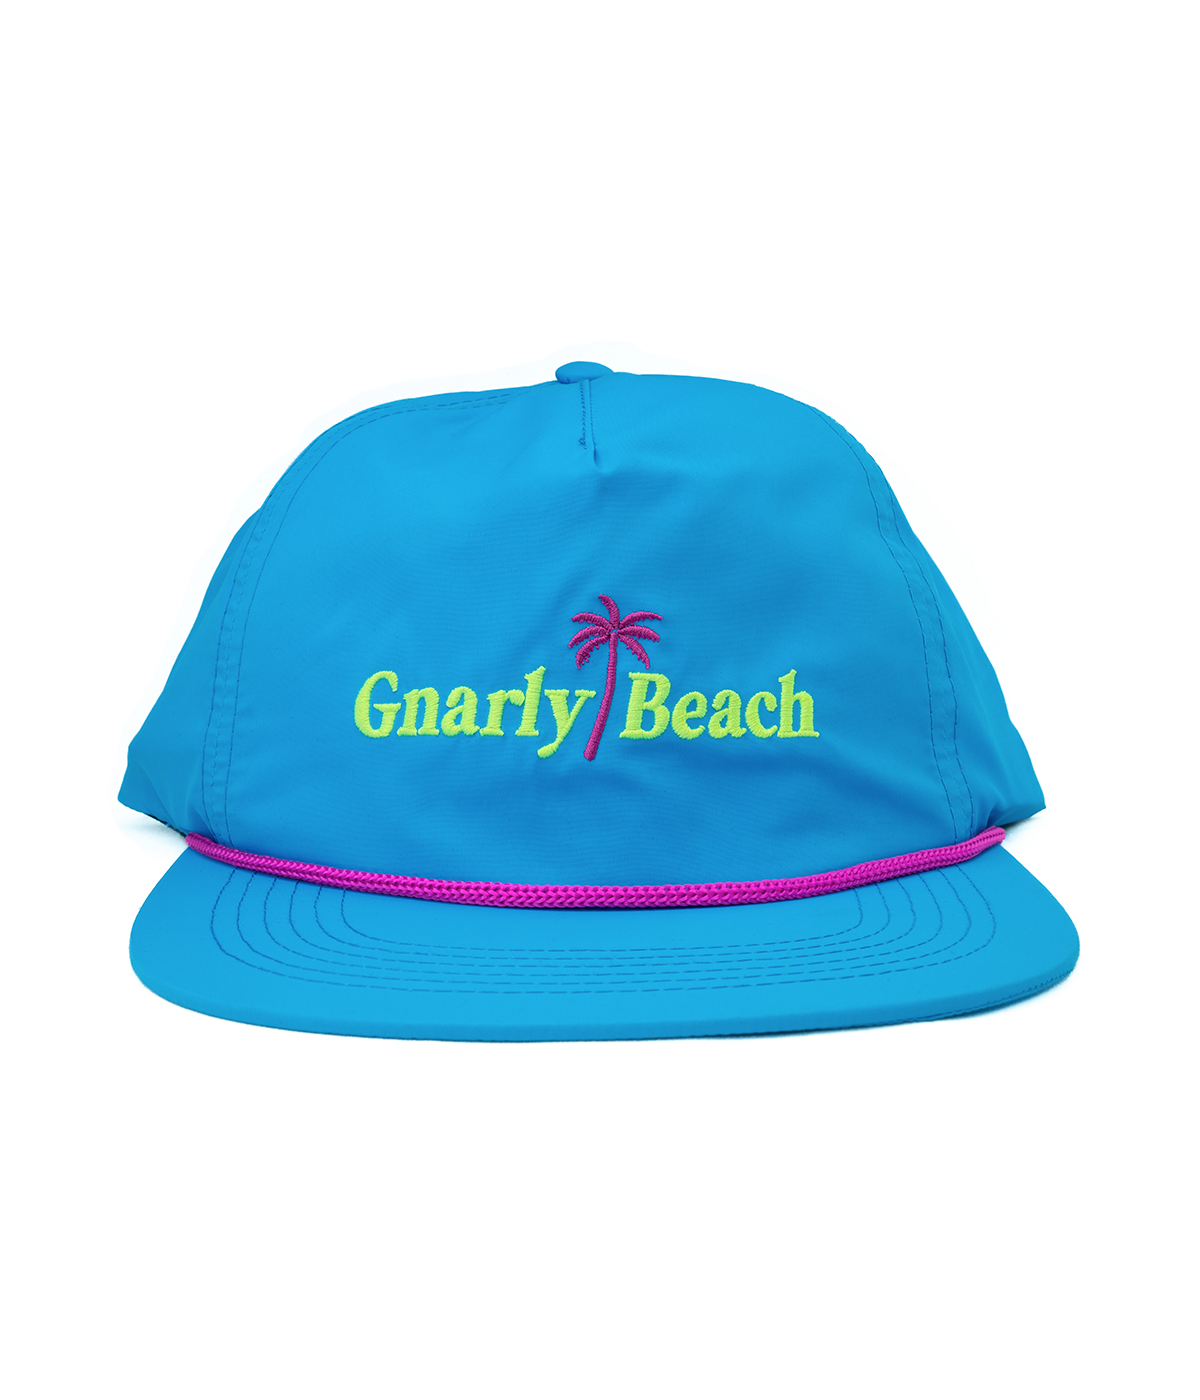 gnarly beach, gnarlybeach.com, gnarly beach malibu hat, neon beach hat, gnarly beach brand, josh lunt, @joshlunt, lifestyle brands, @lifestylebrands.co, neon beach hat